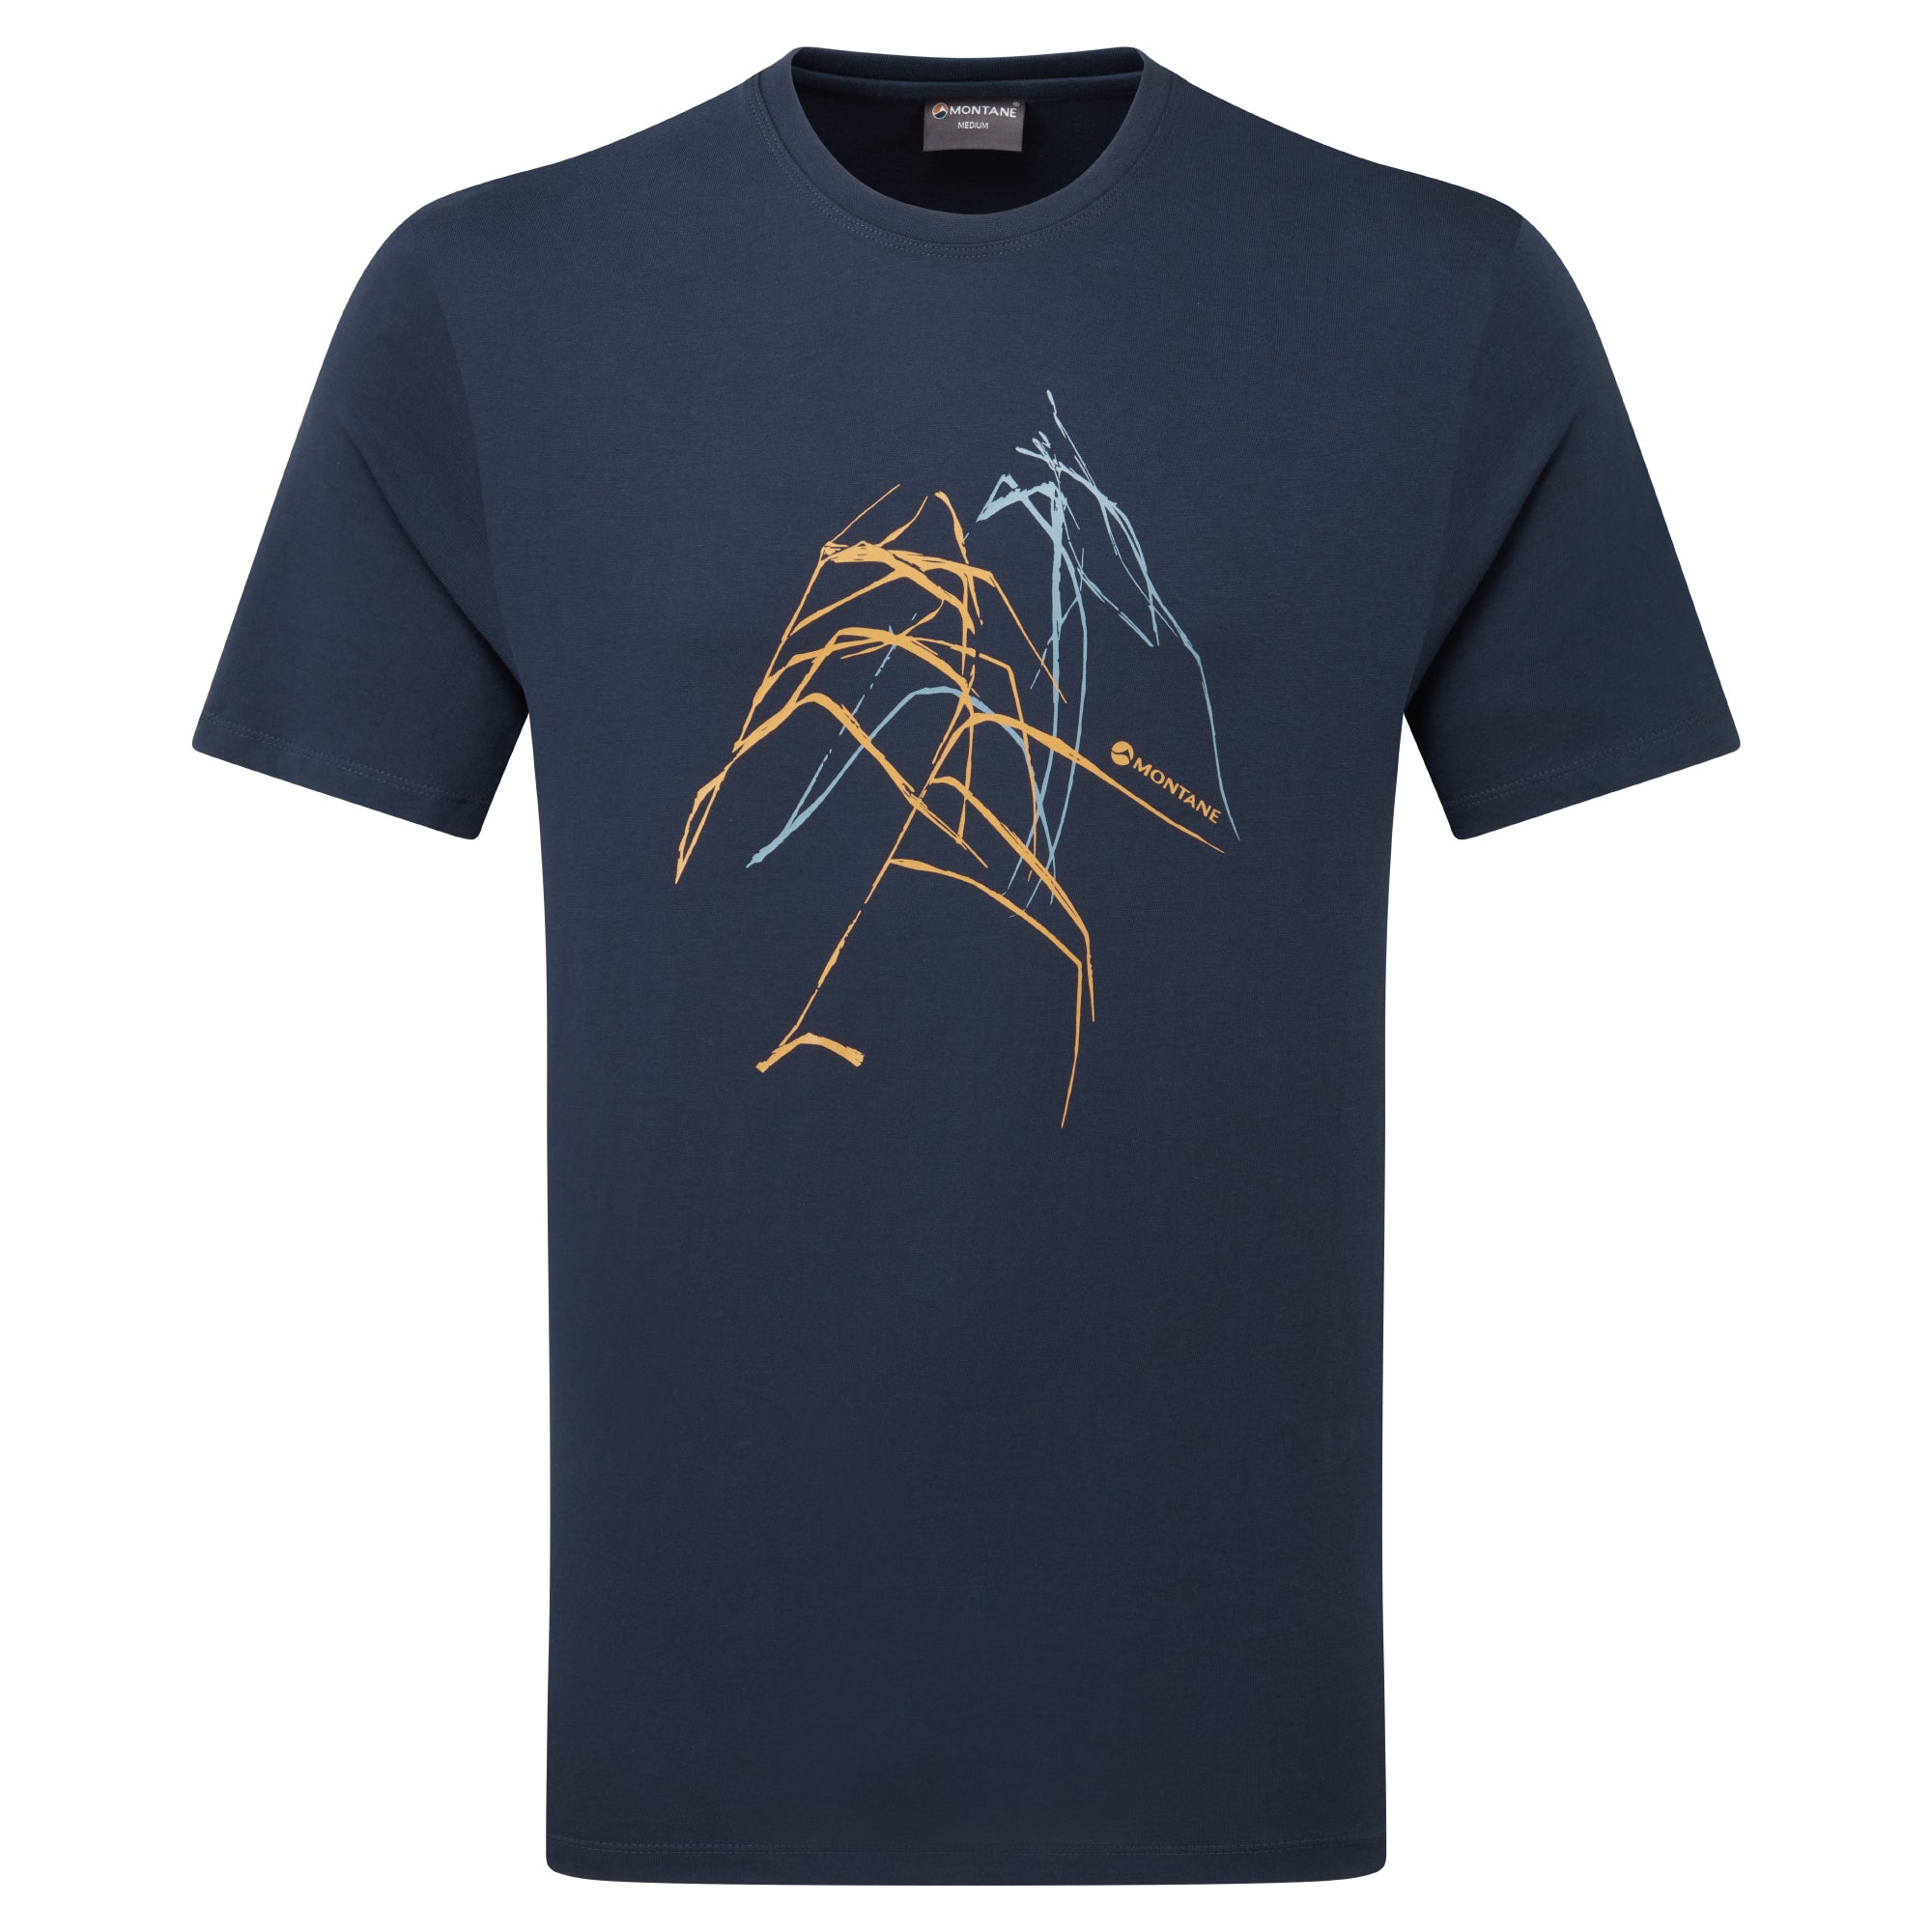 Montane Men's Abstract Mountain T-Shirt